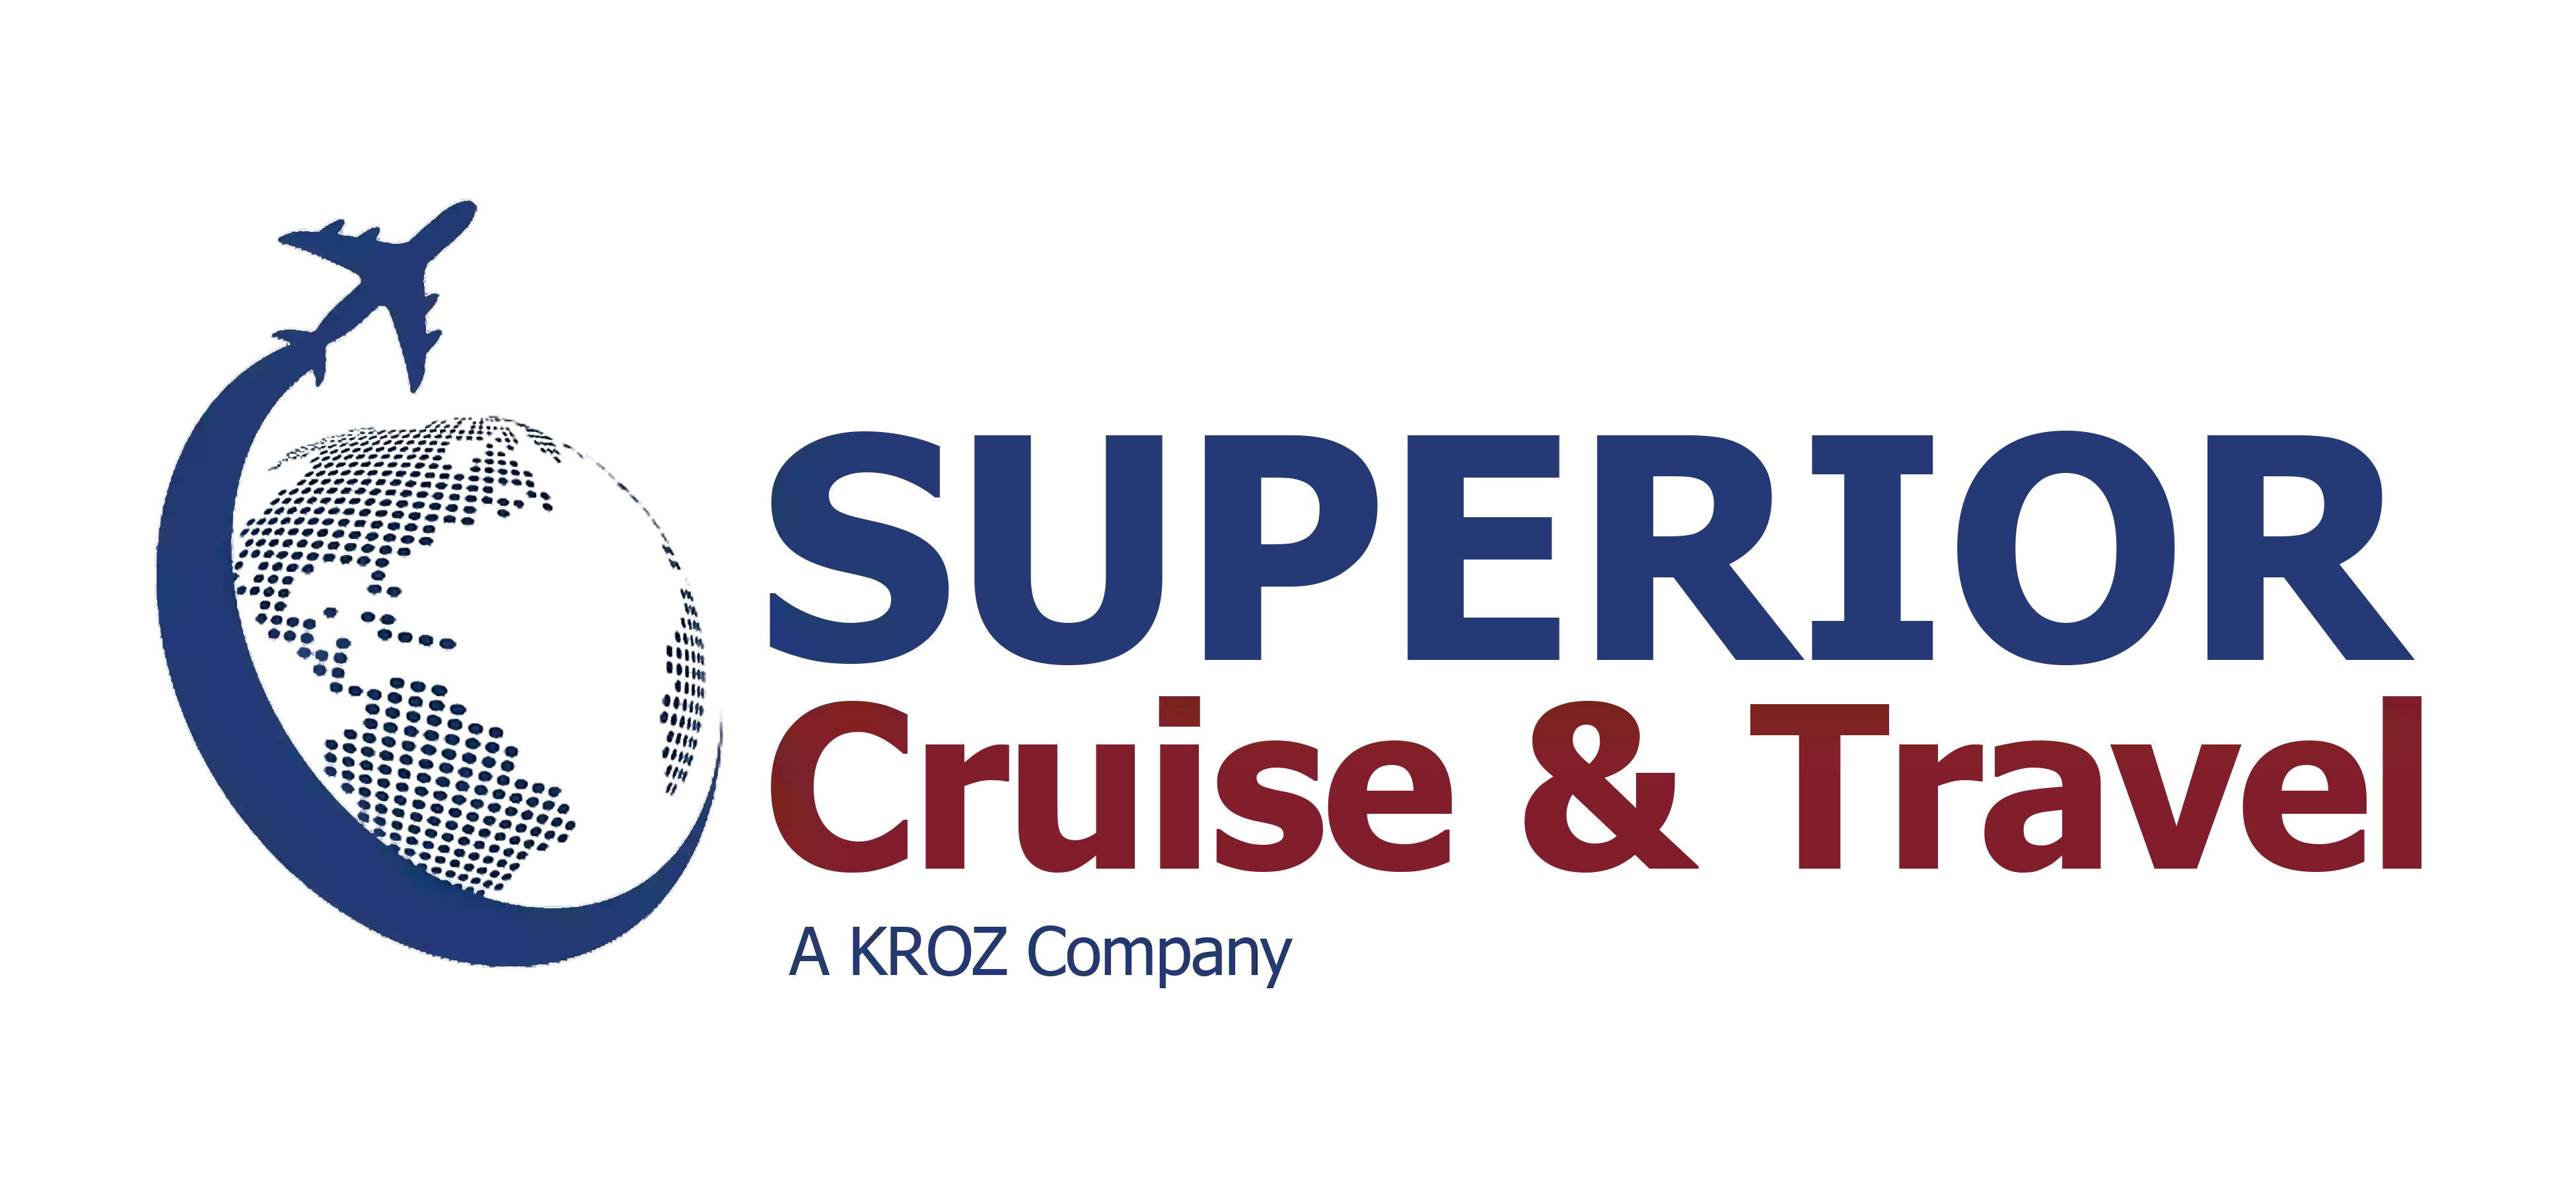 Superior Cruise & Travel Dallas